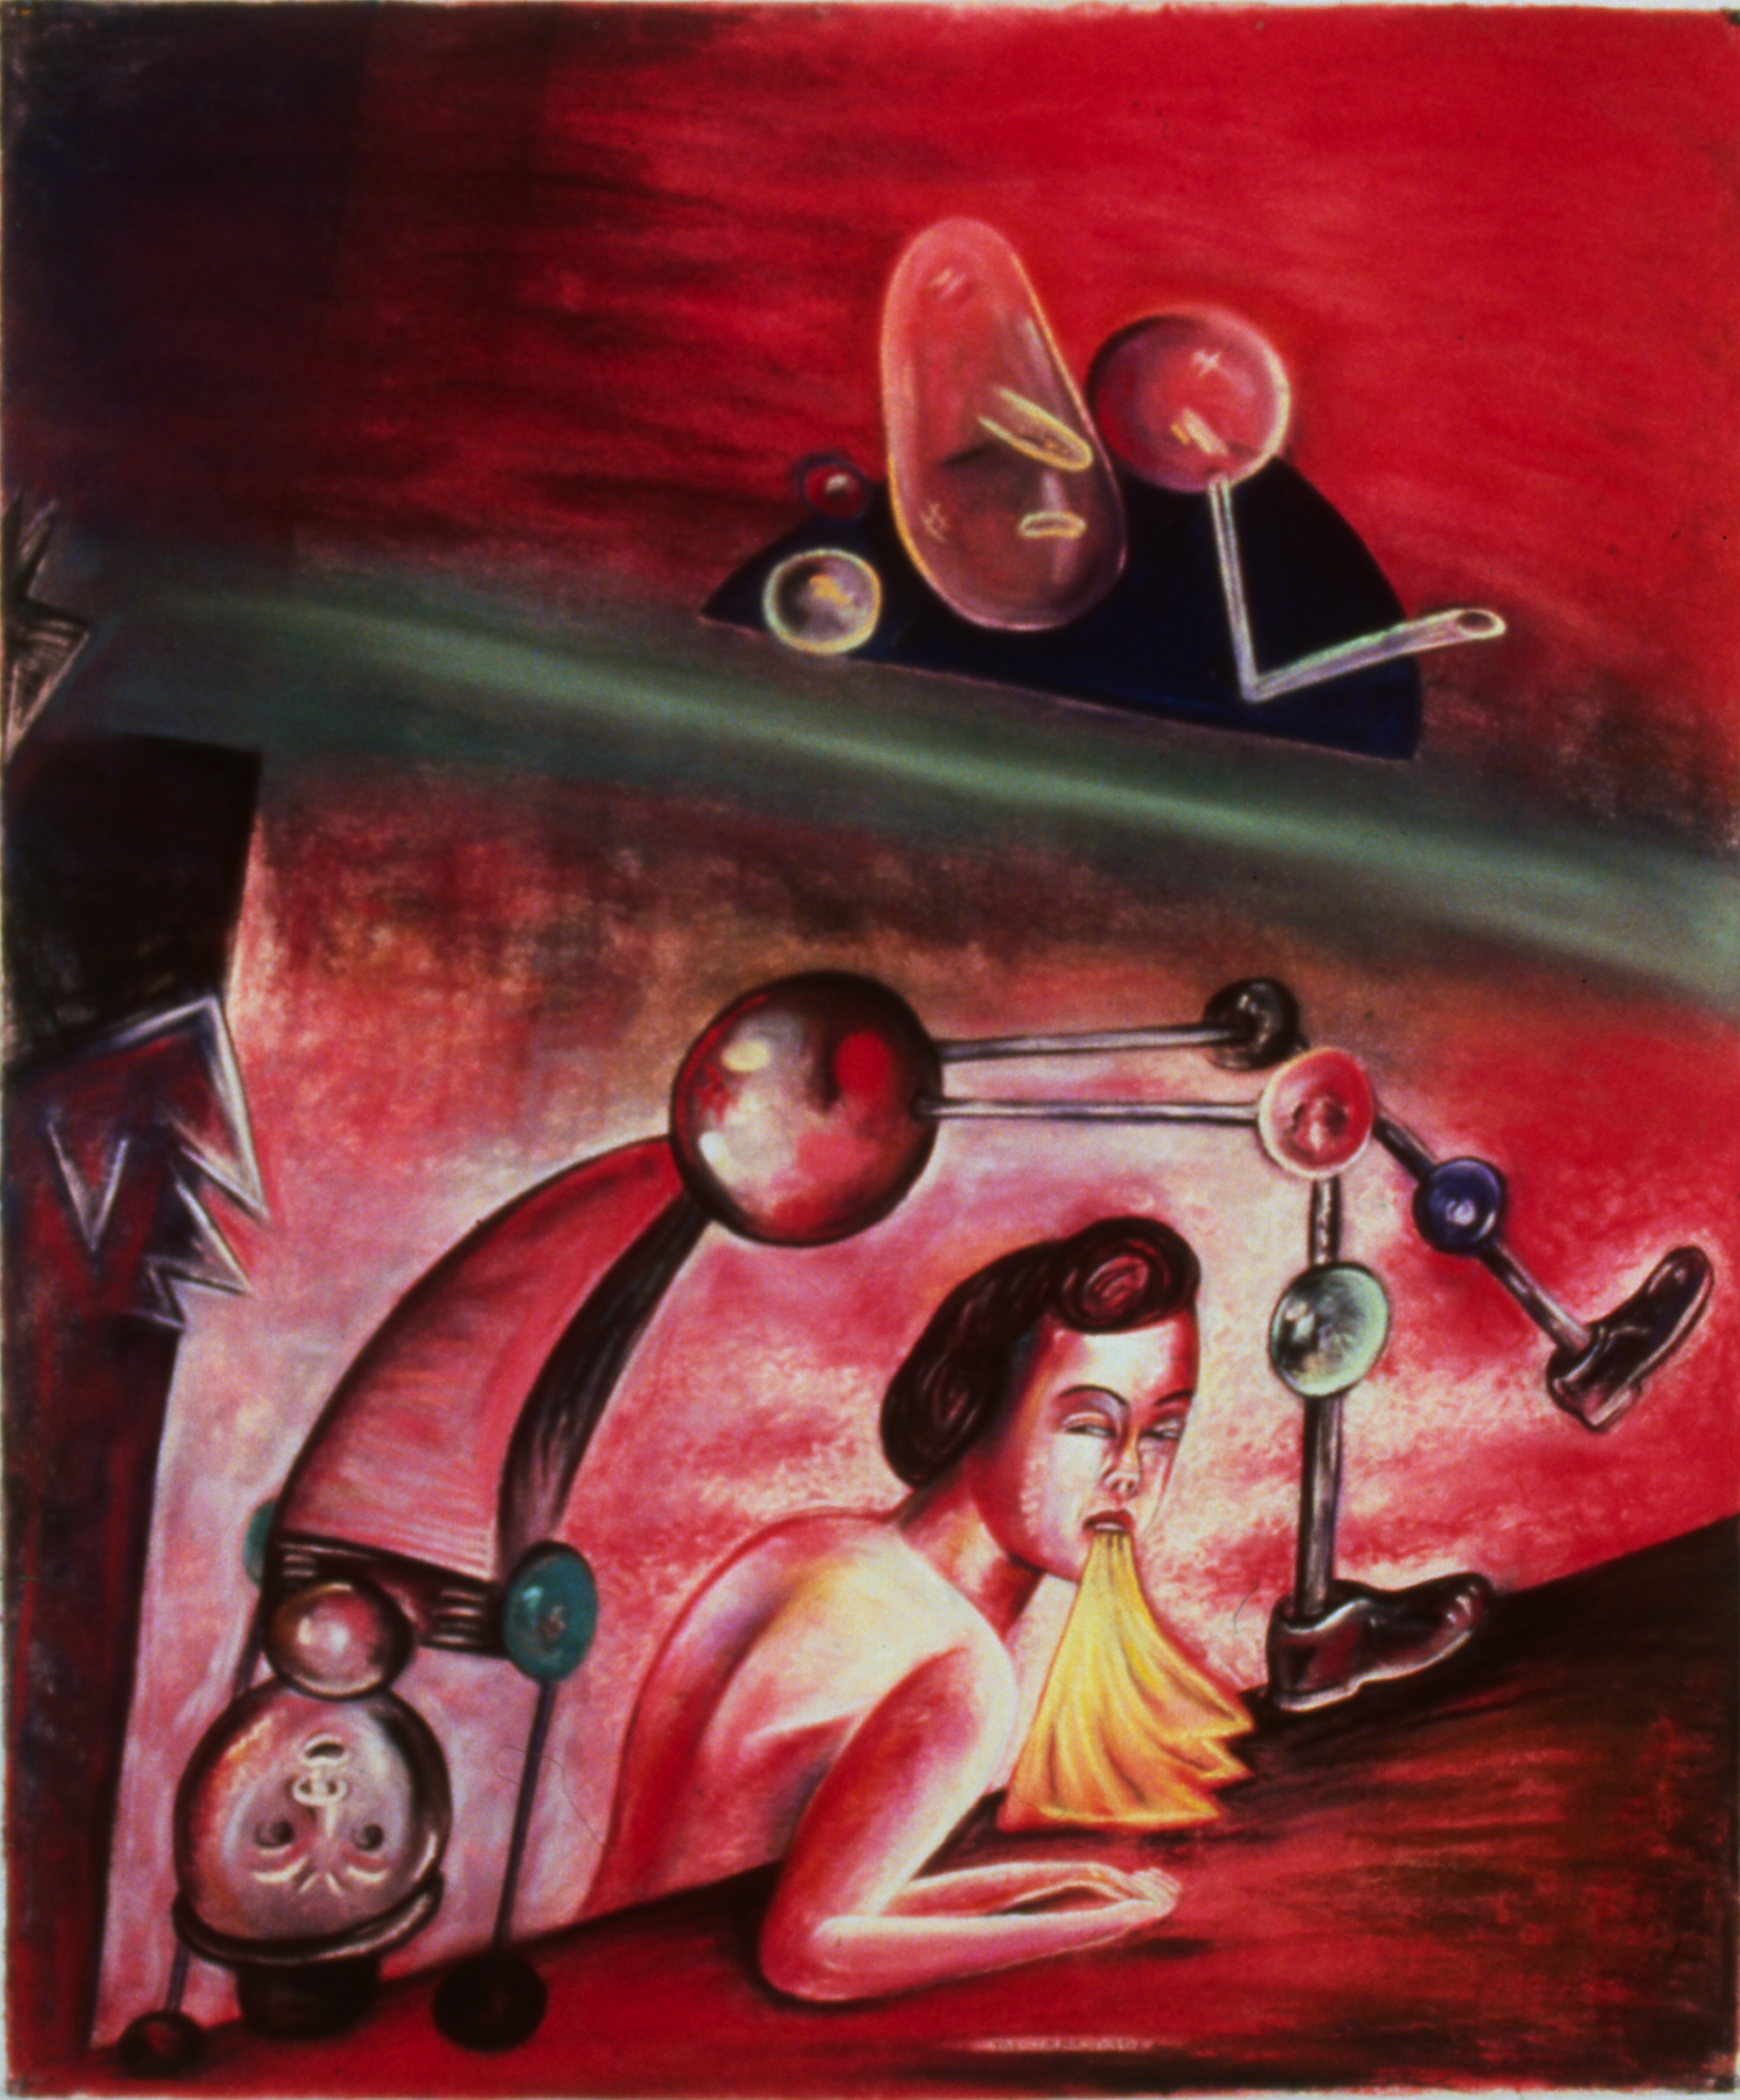 Impersonator II, 50" x 42", pastel on paper, 1988